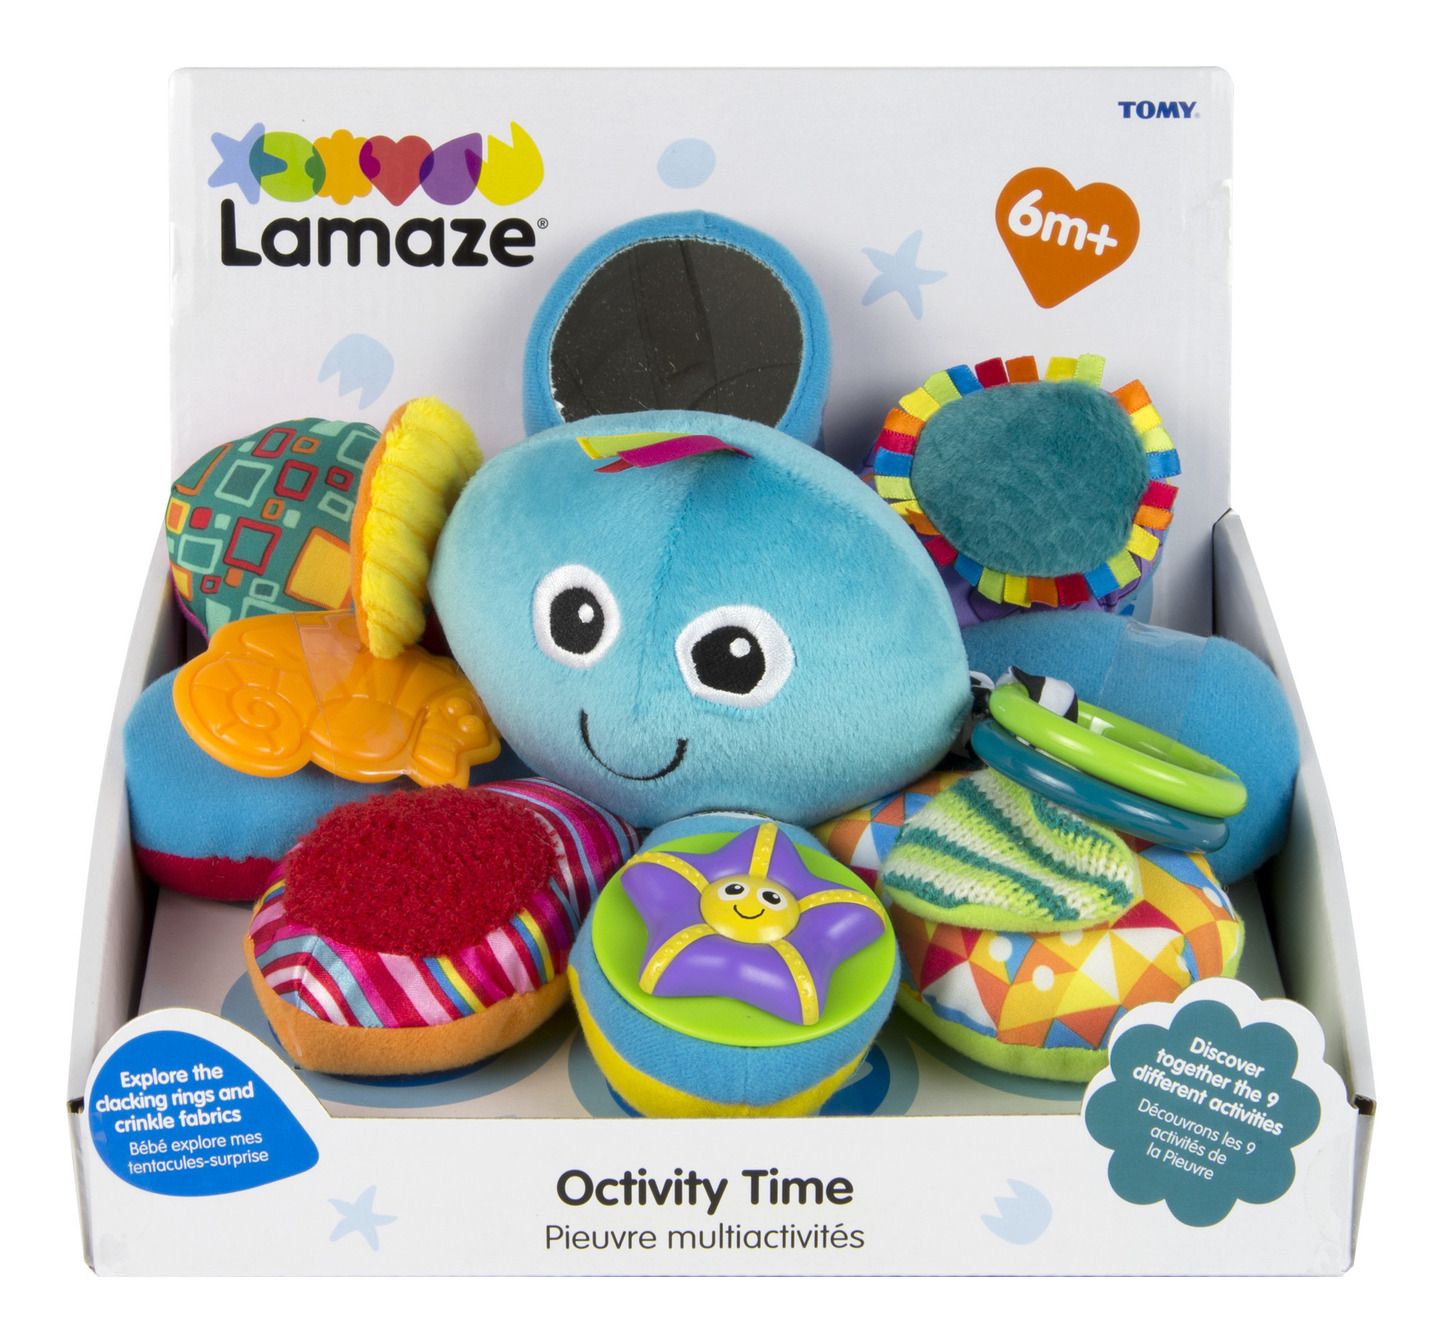 Lamaze - Octivity Time - Baby Development Toy